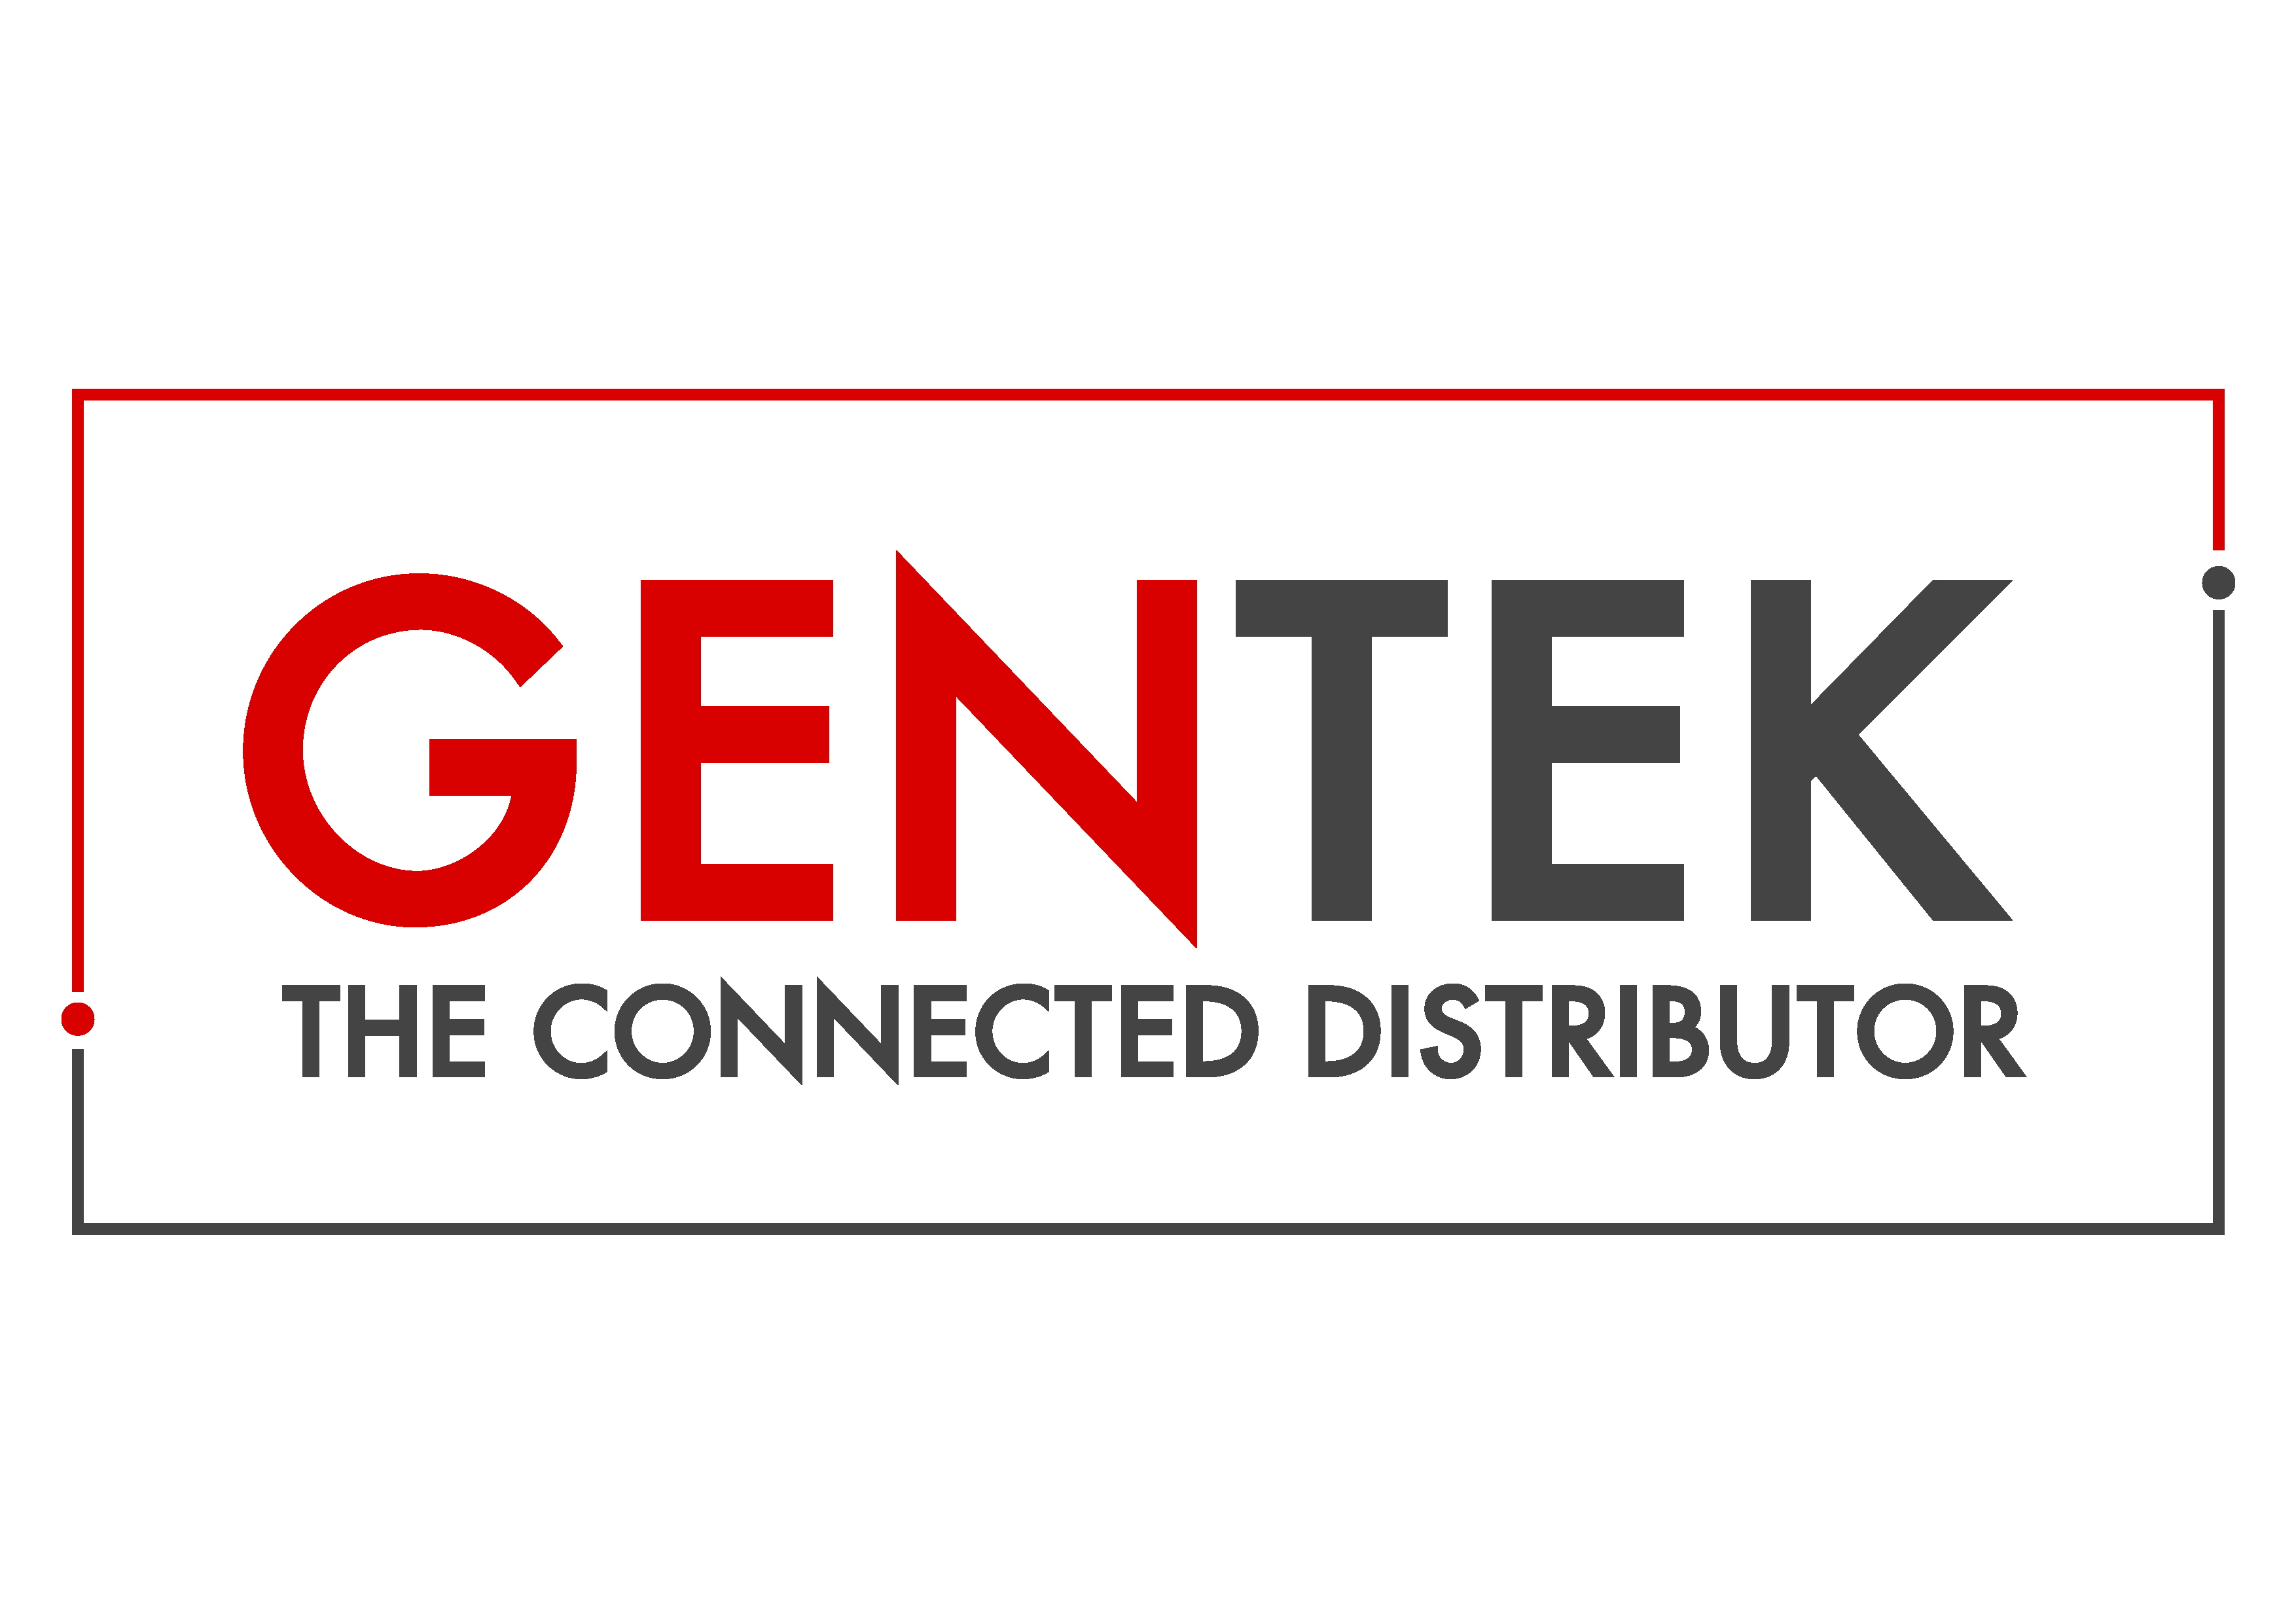 Gentek Marketing Inc.